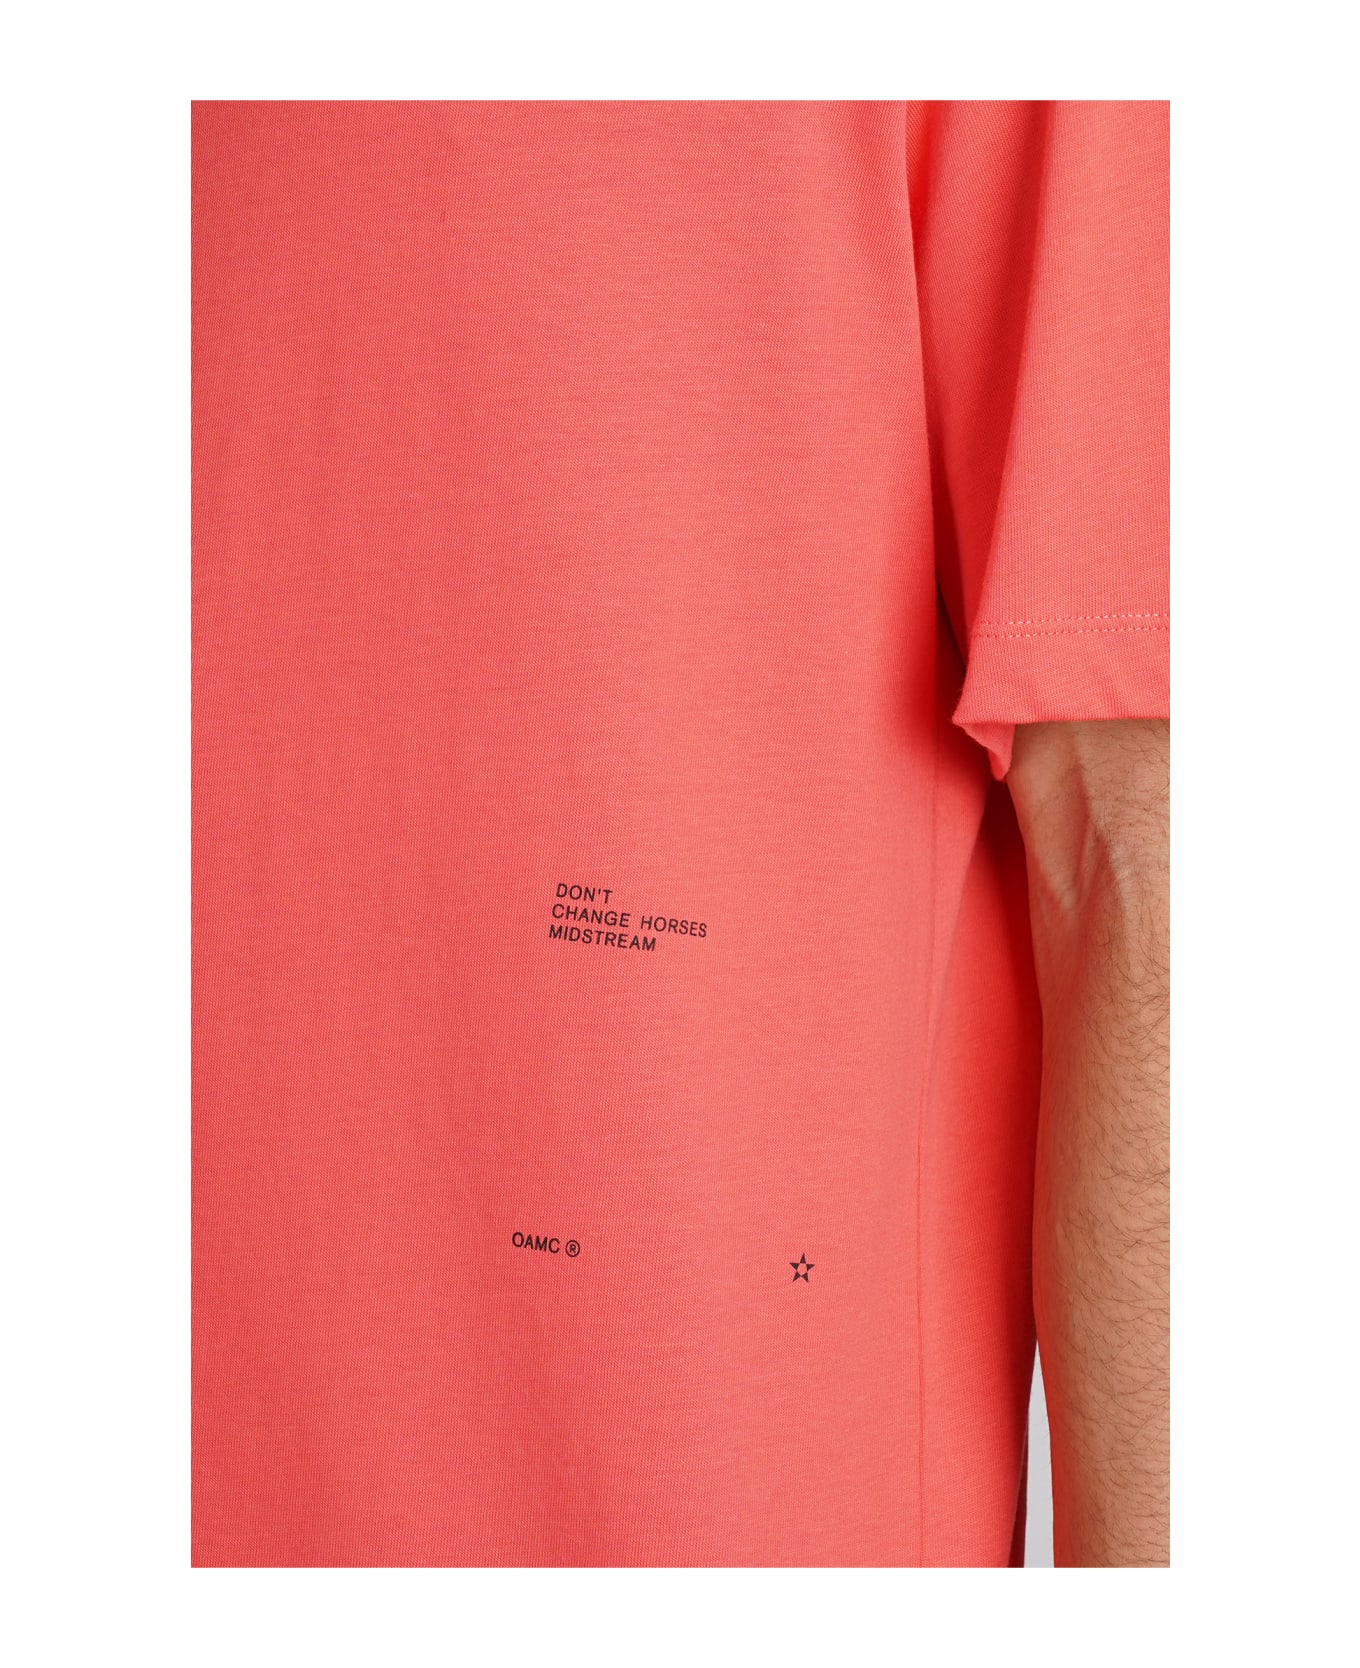 OAMC T-shirt In Orange Cotton - orange